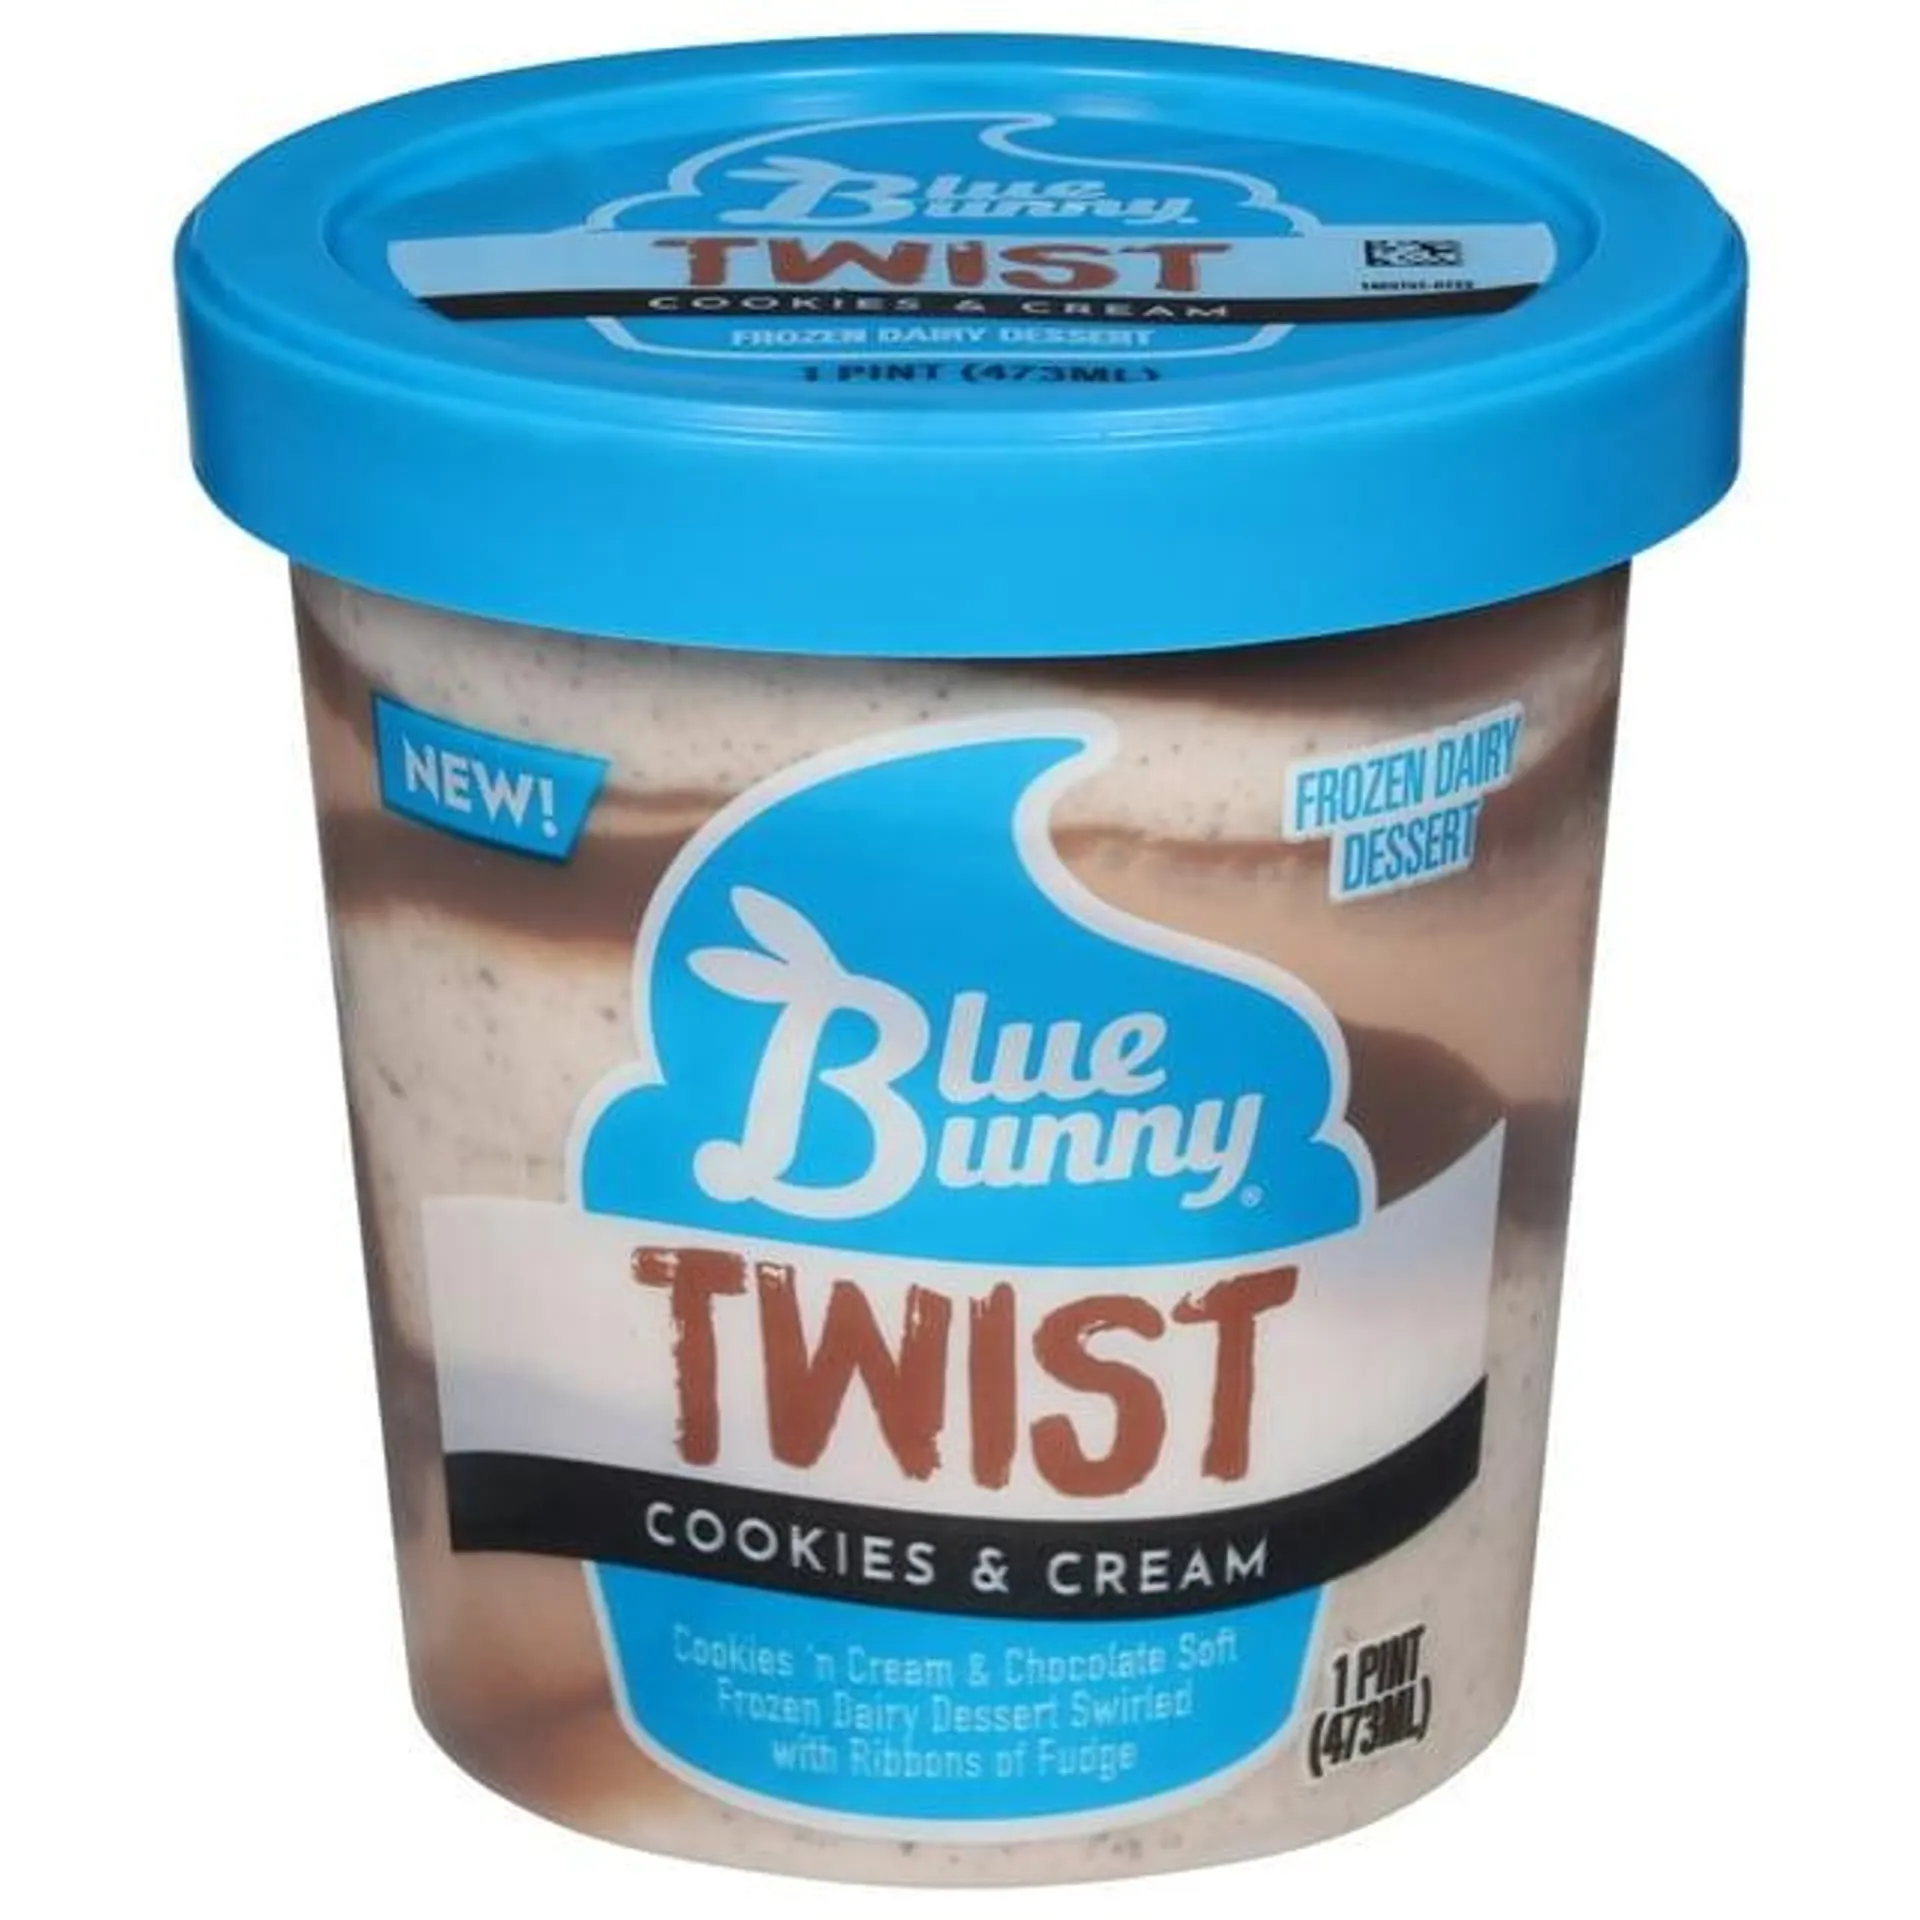 Blue Bunny Twist Cookies and Cream Frozen Dessert, 16 fl oz Pint